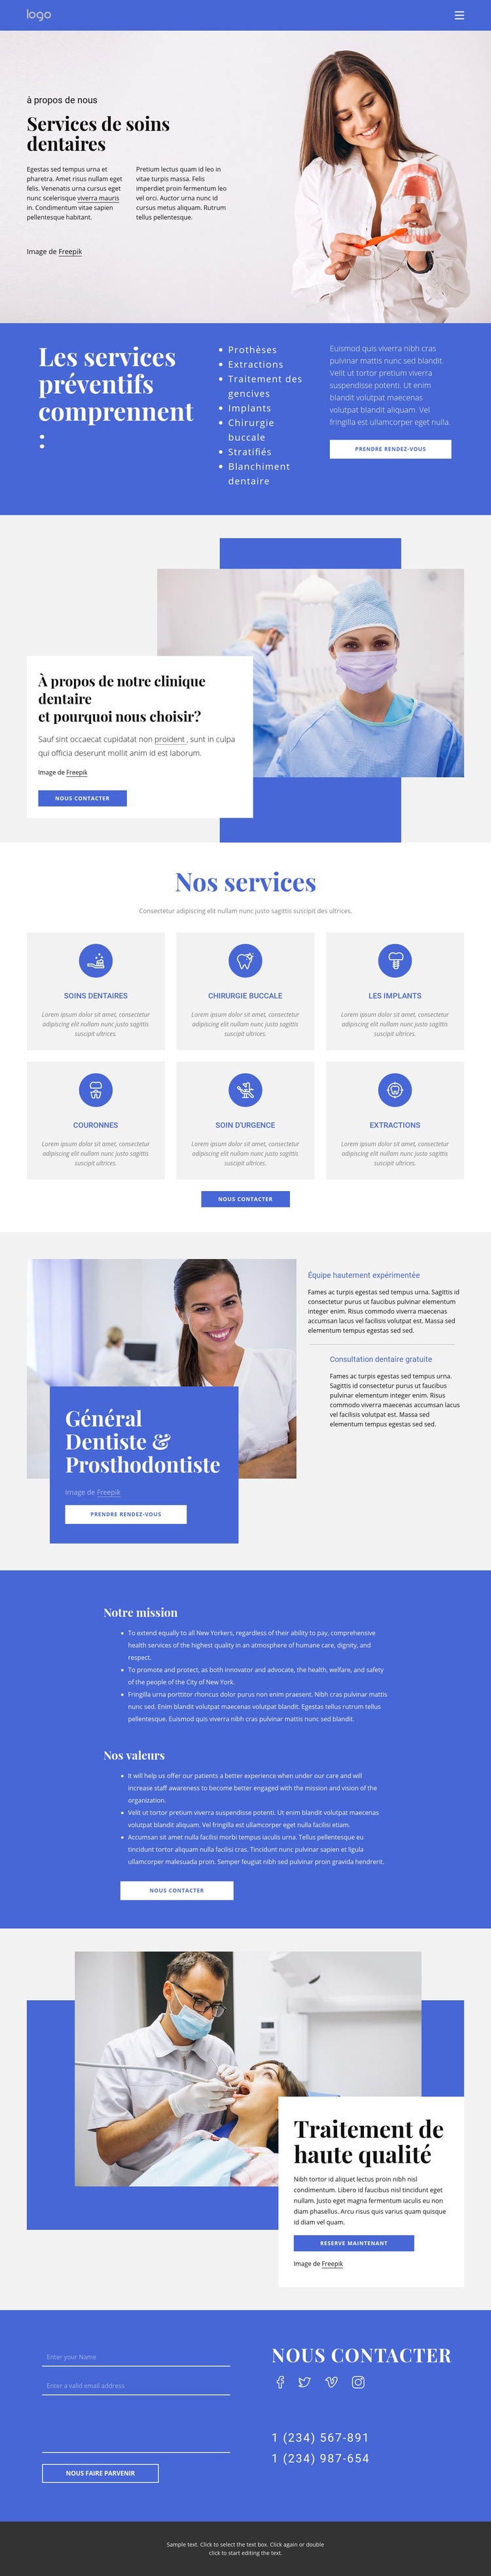 Dentiste et prosthodontie Modèle HTML5